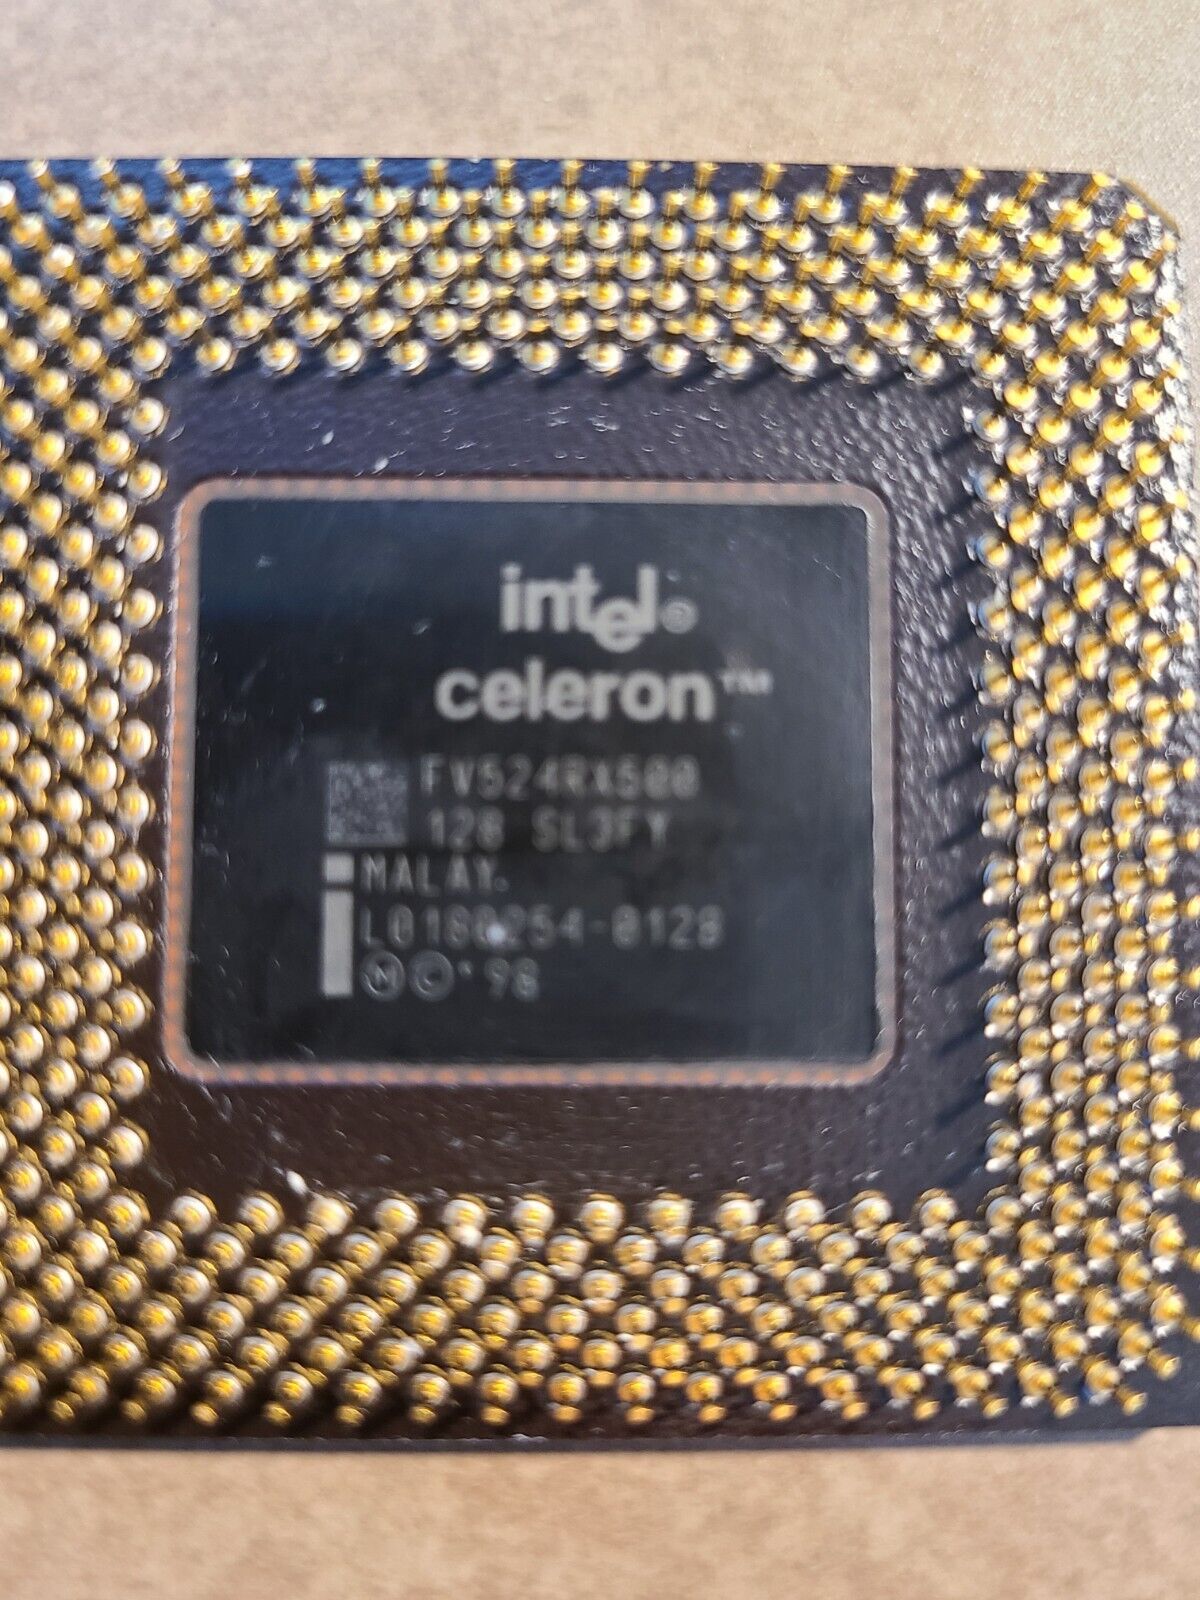  Intel Celeron 500MHz SL3FY (FV80524RX500128SL3FY) CPU - Used, Tested OK